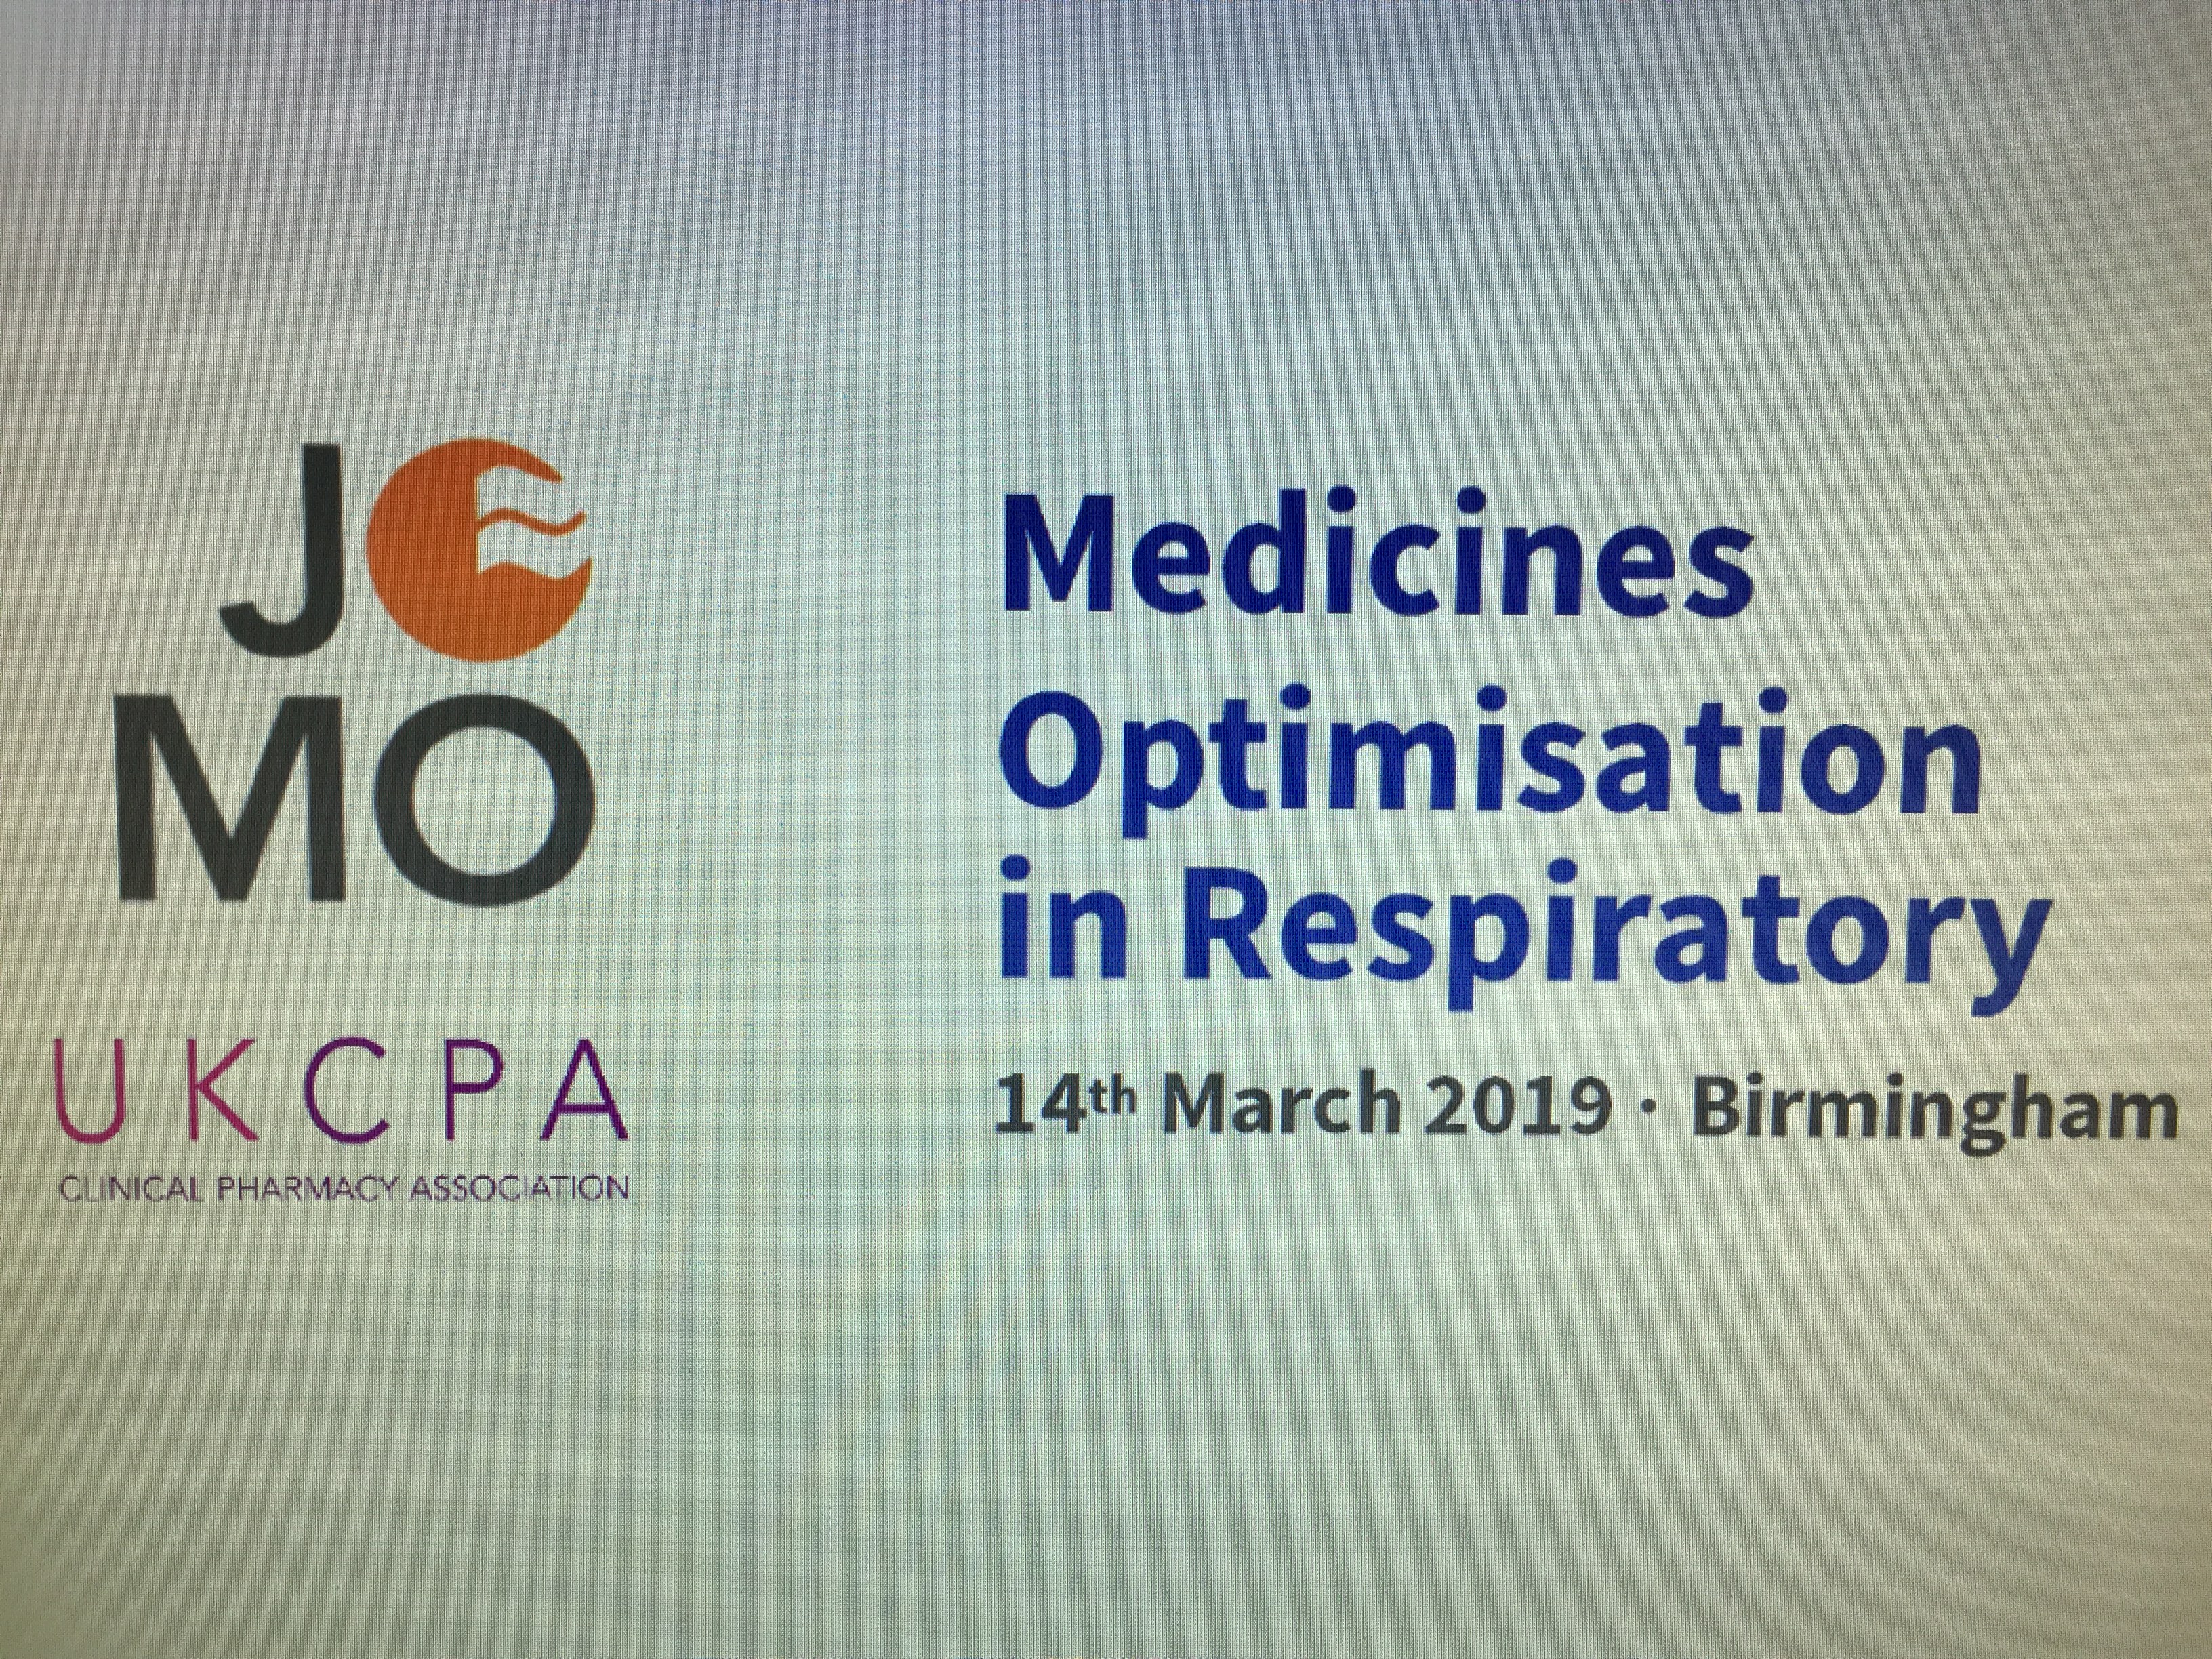 JoMO-UKCPA Pharmacy Respiratory Workshop Birmingham 14th March